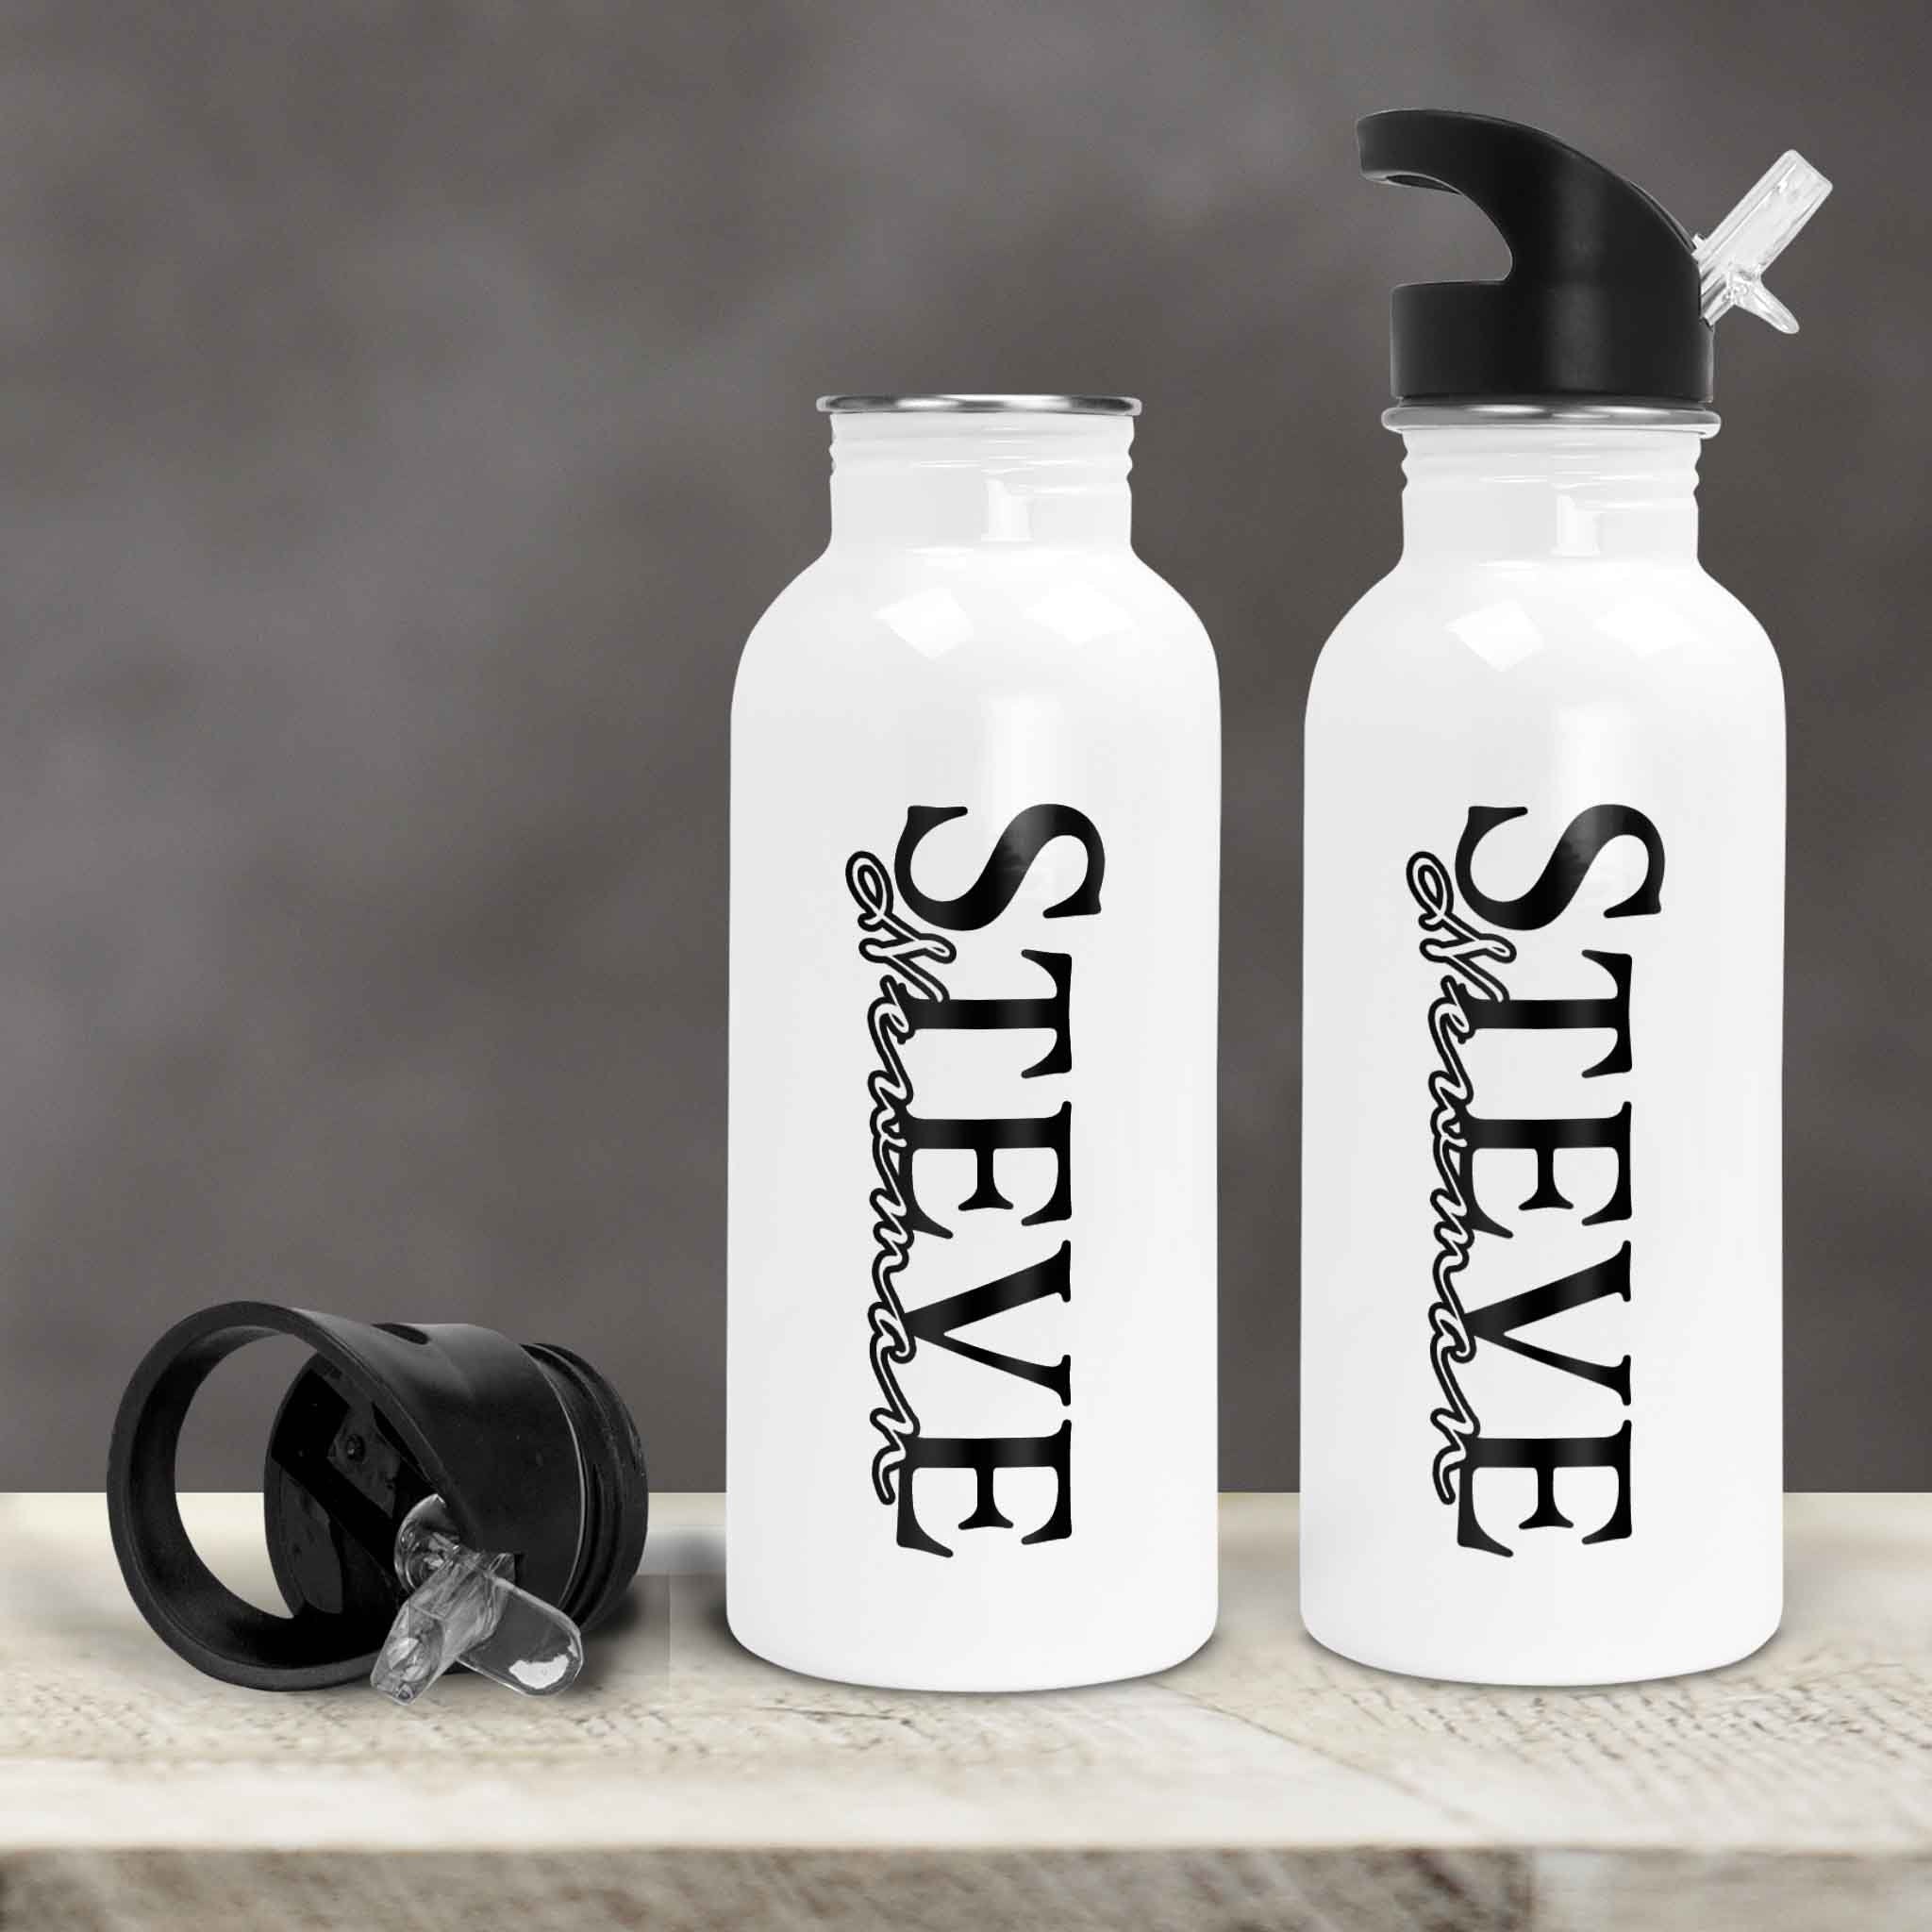 Personalized Water Bottles, Custom Stainless Steel Water Bottles